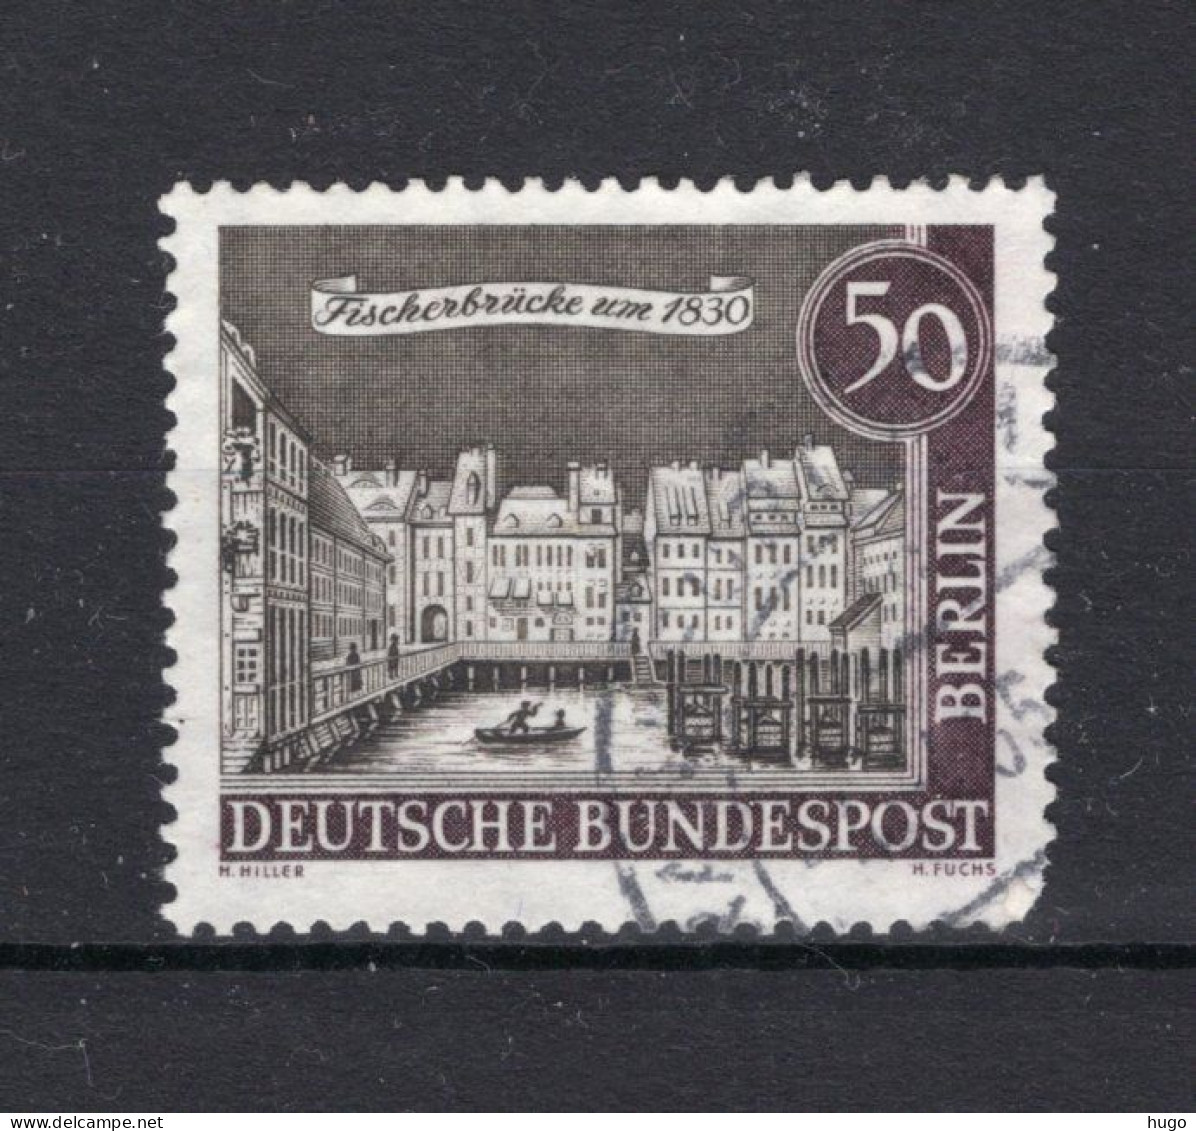 DUITSLAND BERLIN Yt. 202° Gestempeld 1962-1963 - Used Stamps